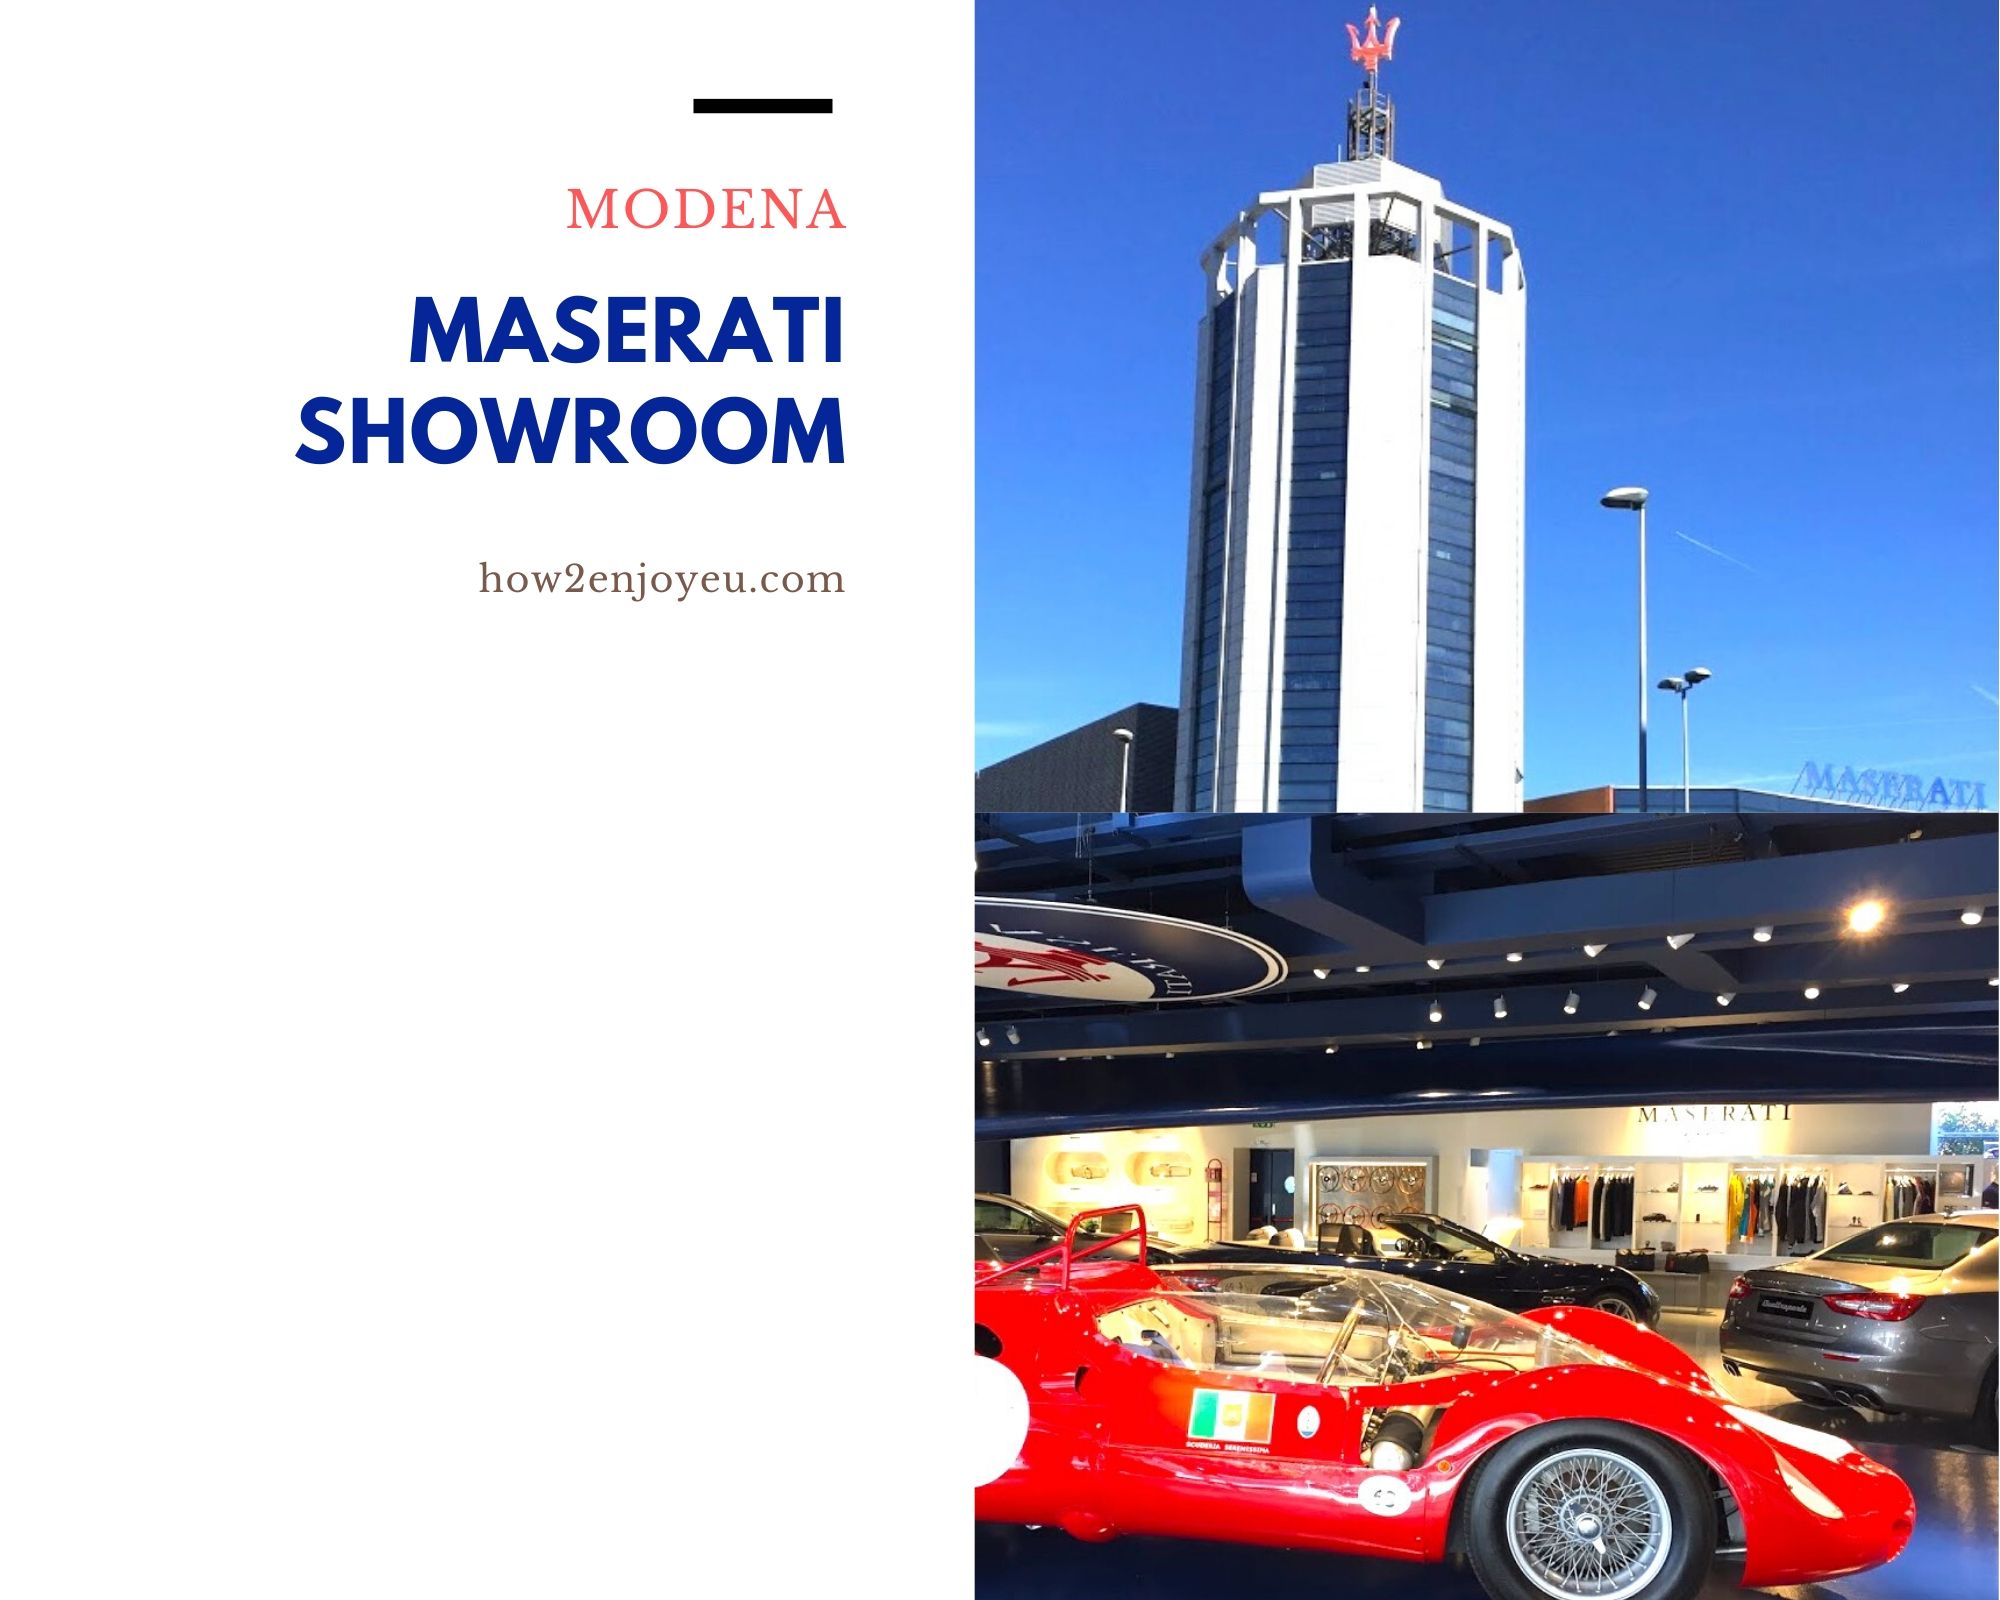 You are currently viewing モデナ、マセラティ本社にあるショールームを覗いてみたら・・・【Maserati Modena】